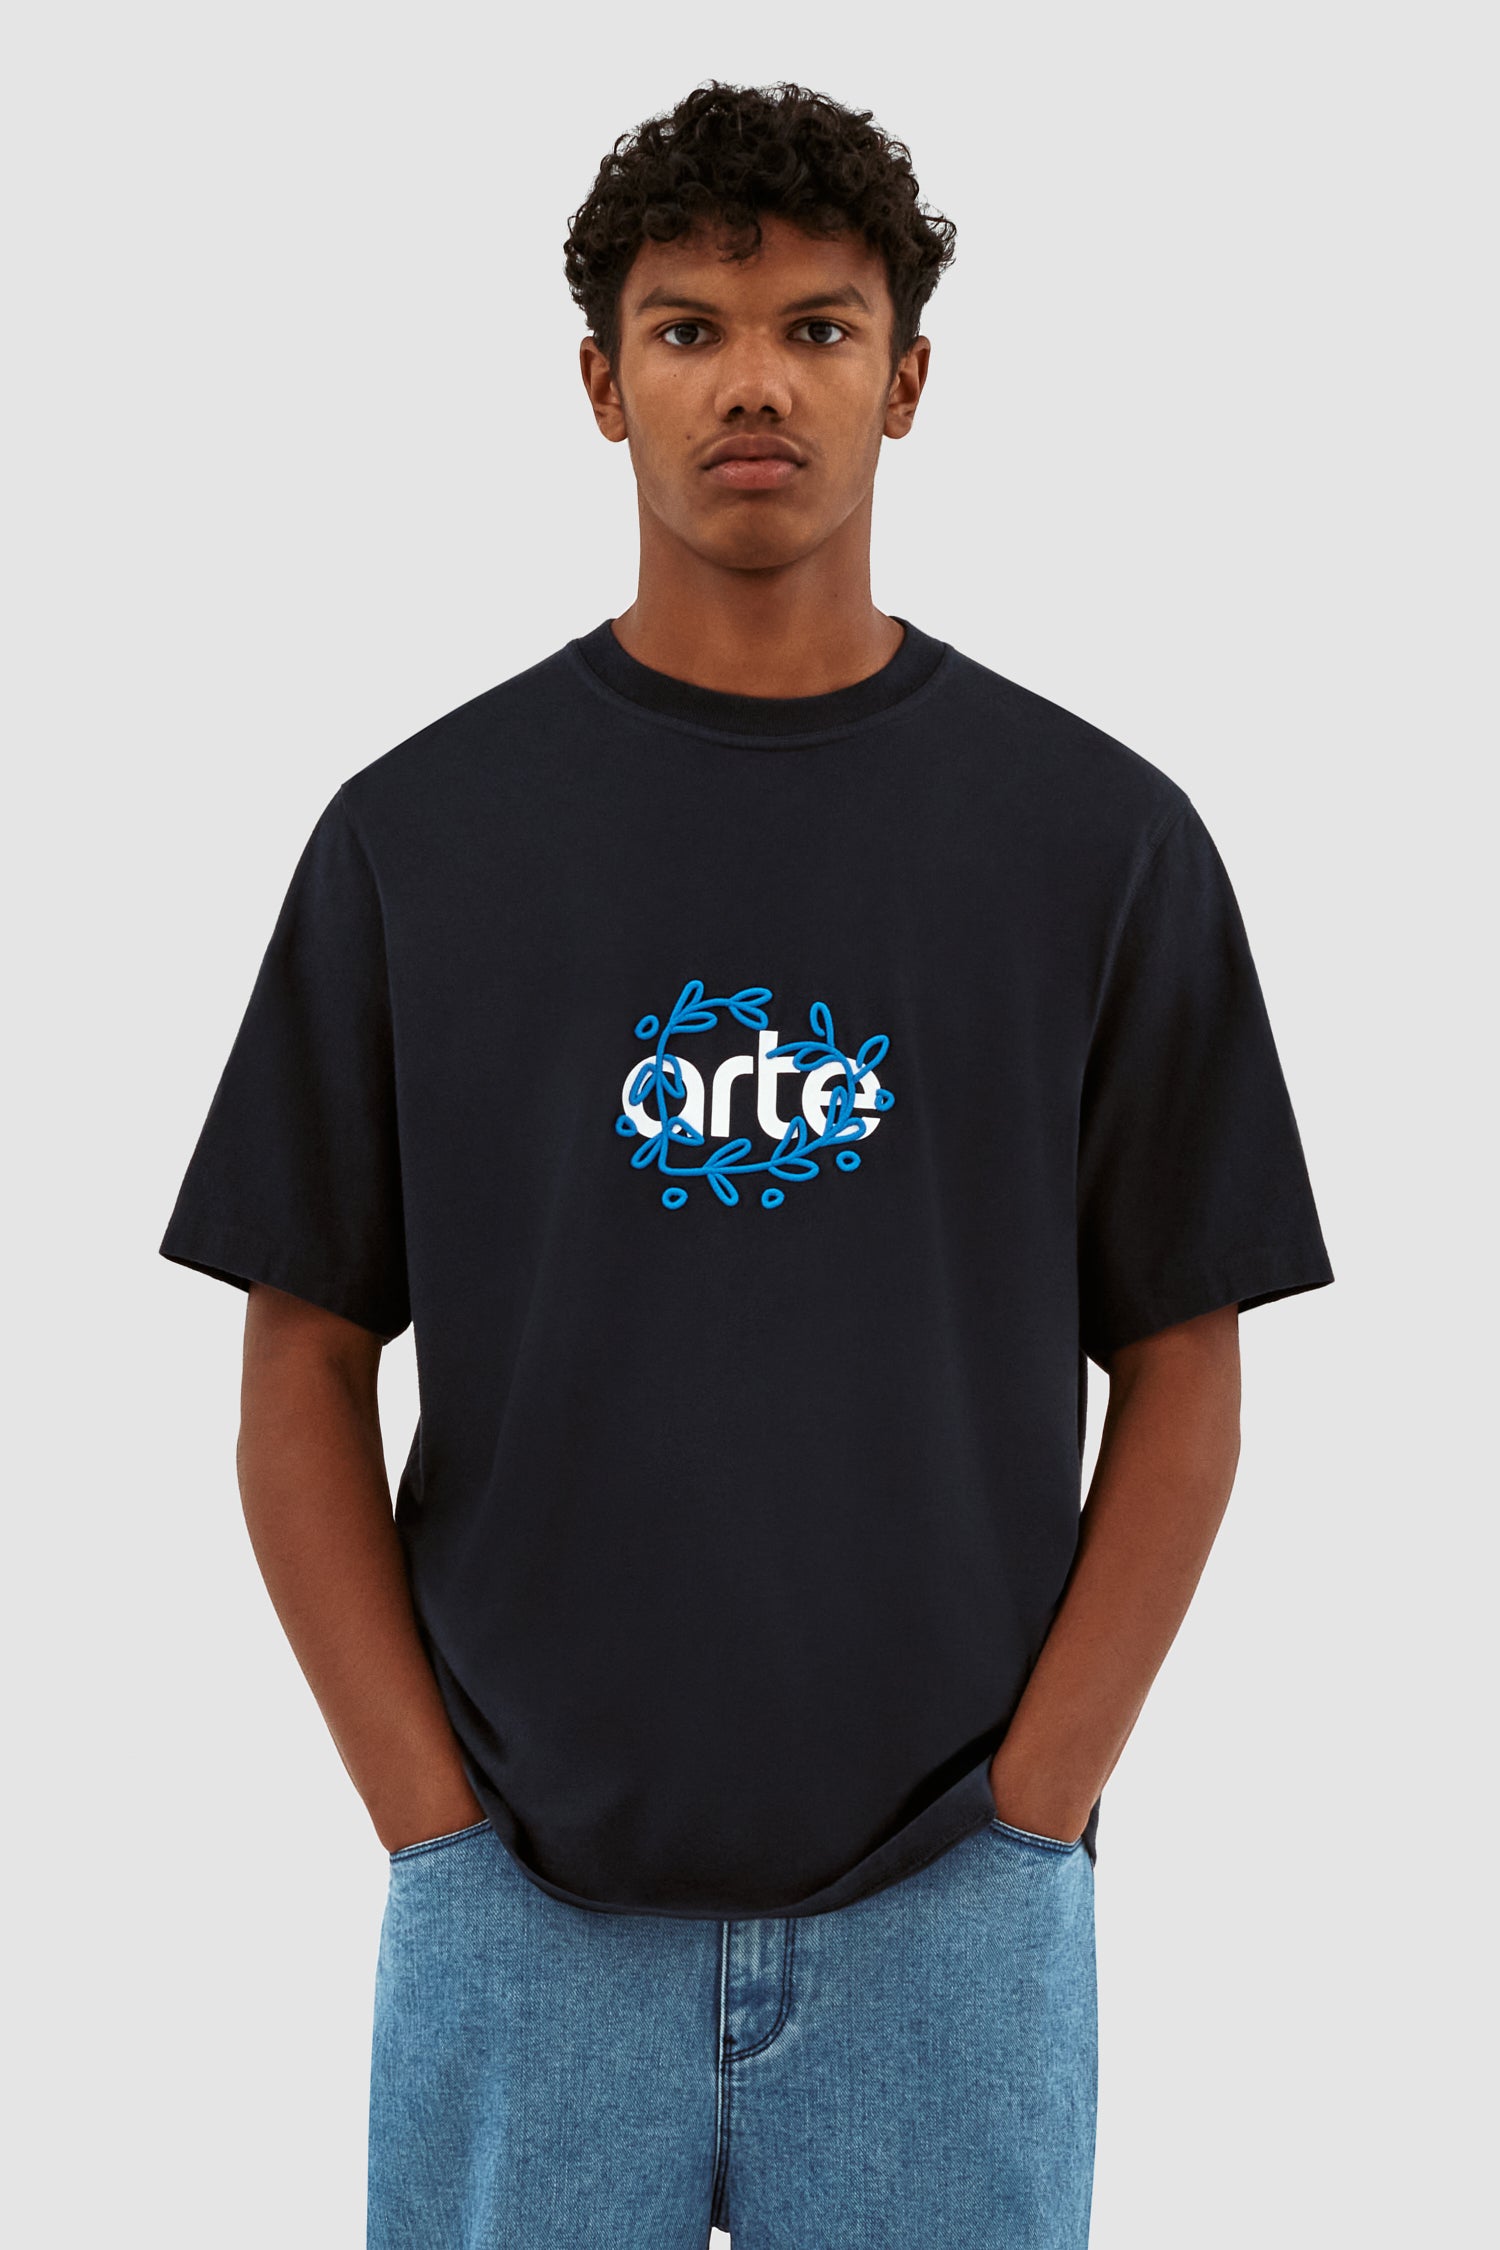 Teo Arte - T-shirt frontal - Marine